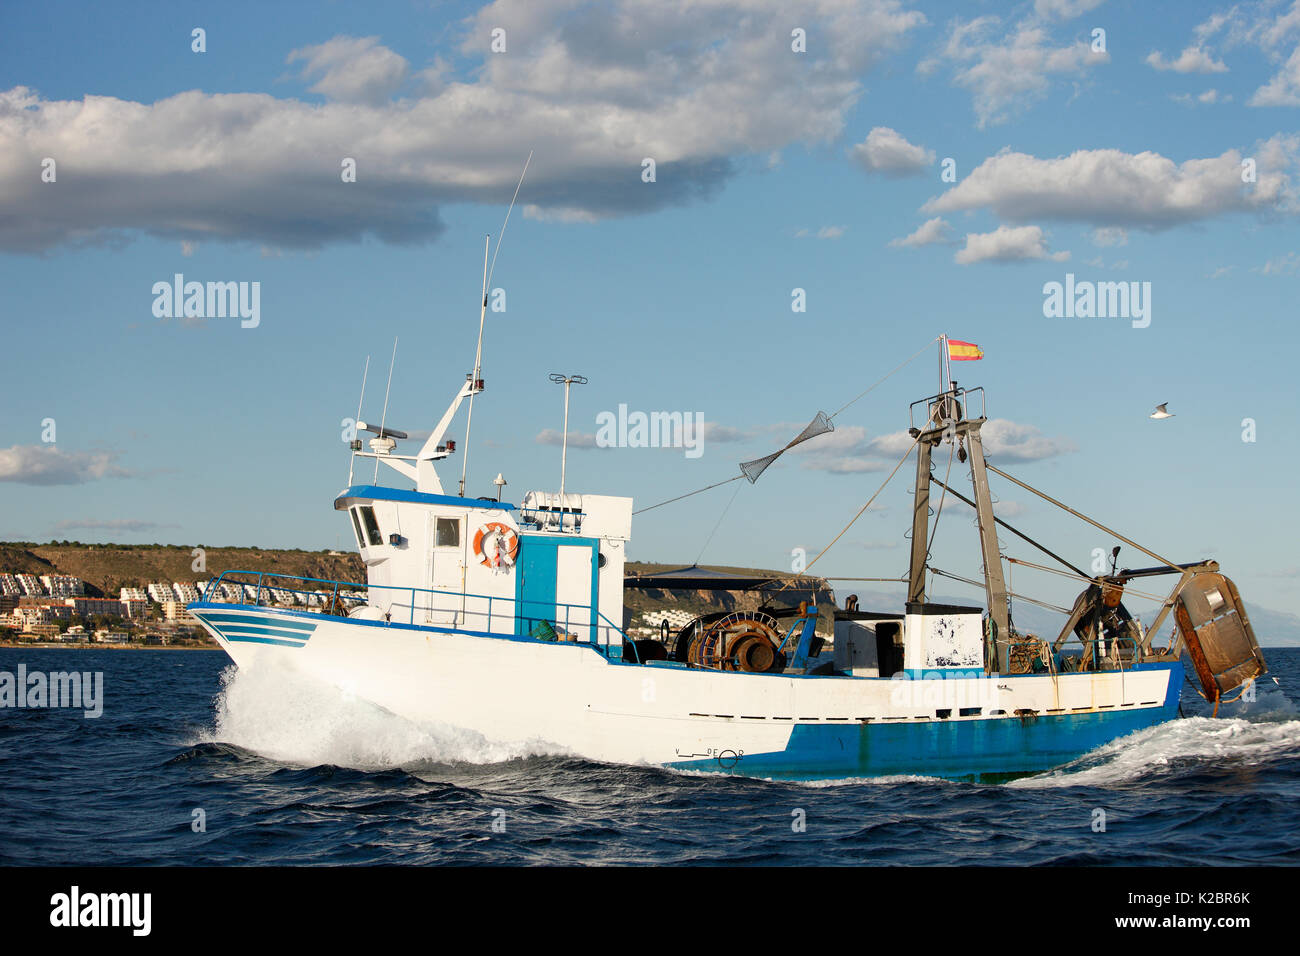 Trawler off the coast of Santa Pola, Alicante, Spain, November 2008. All non-editorial uses must be cleared individually. Stock Photo